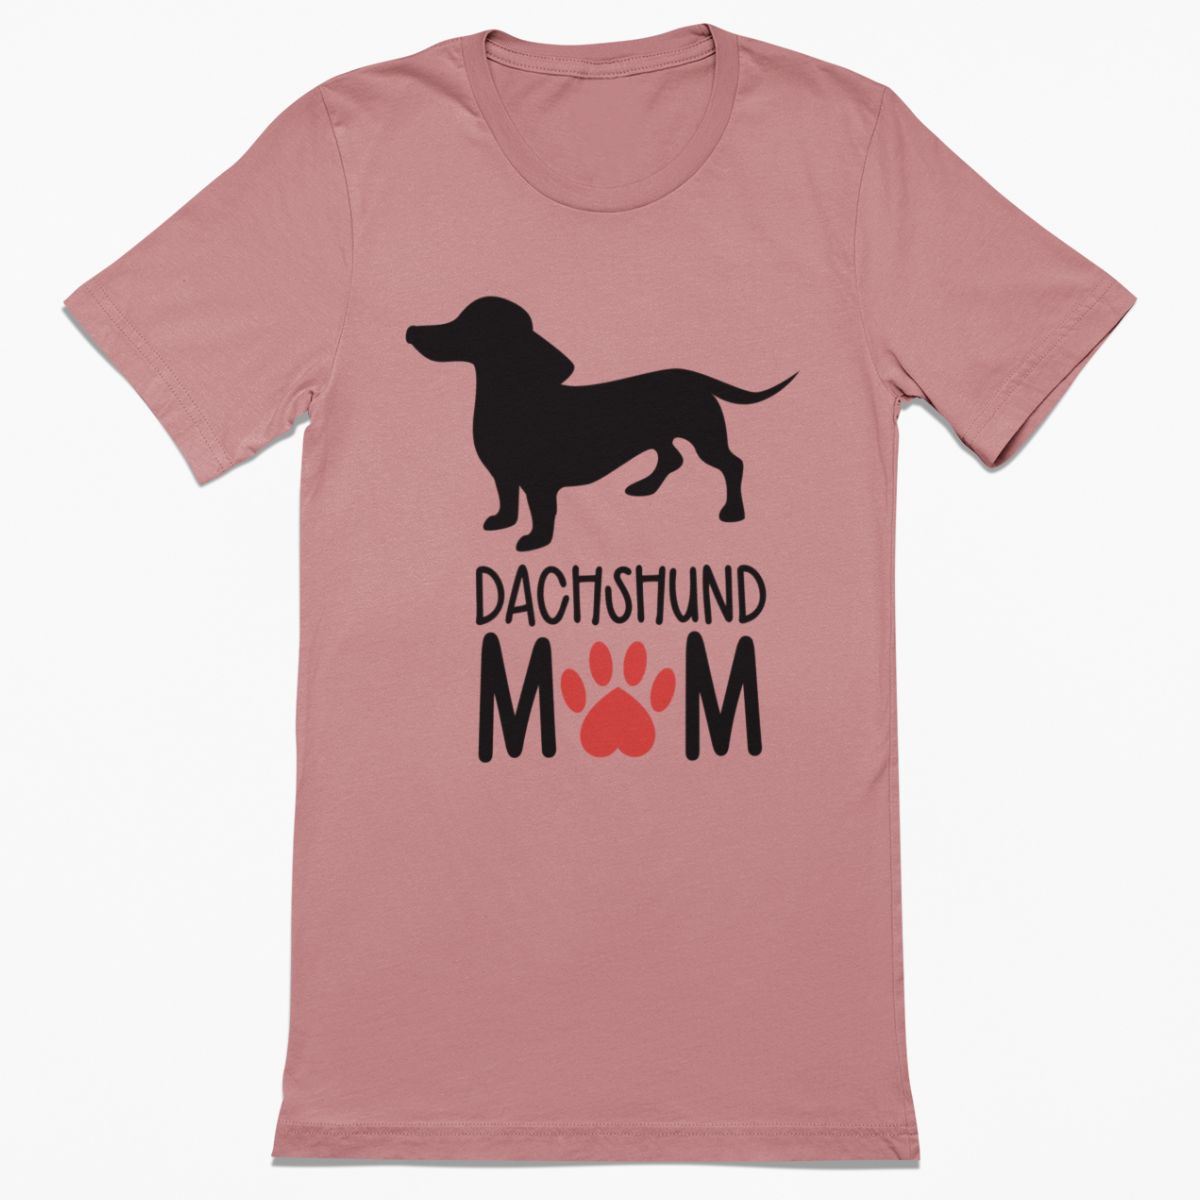 Dachshund Mom Shirt